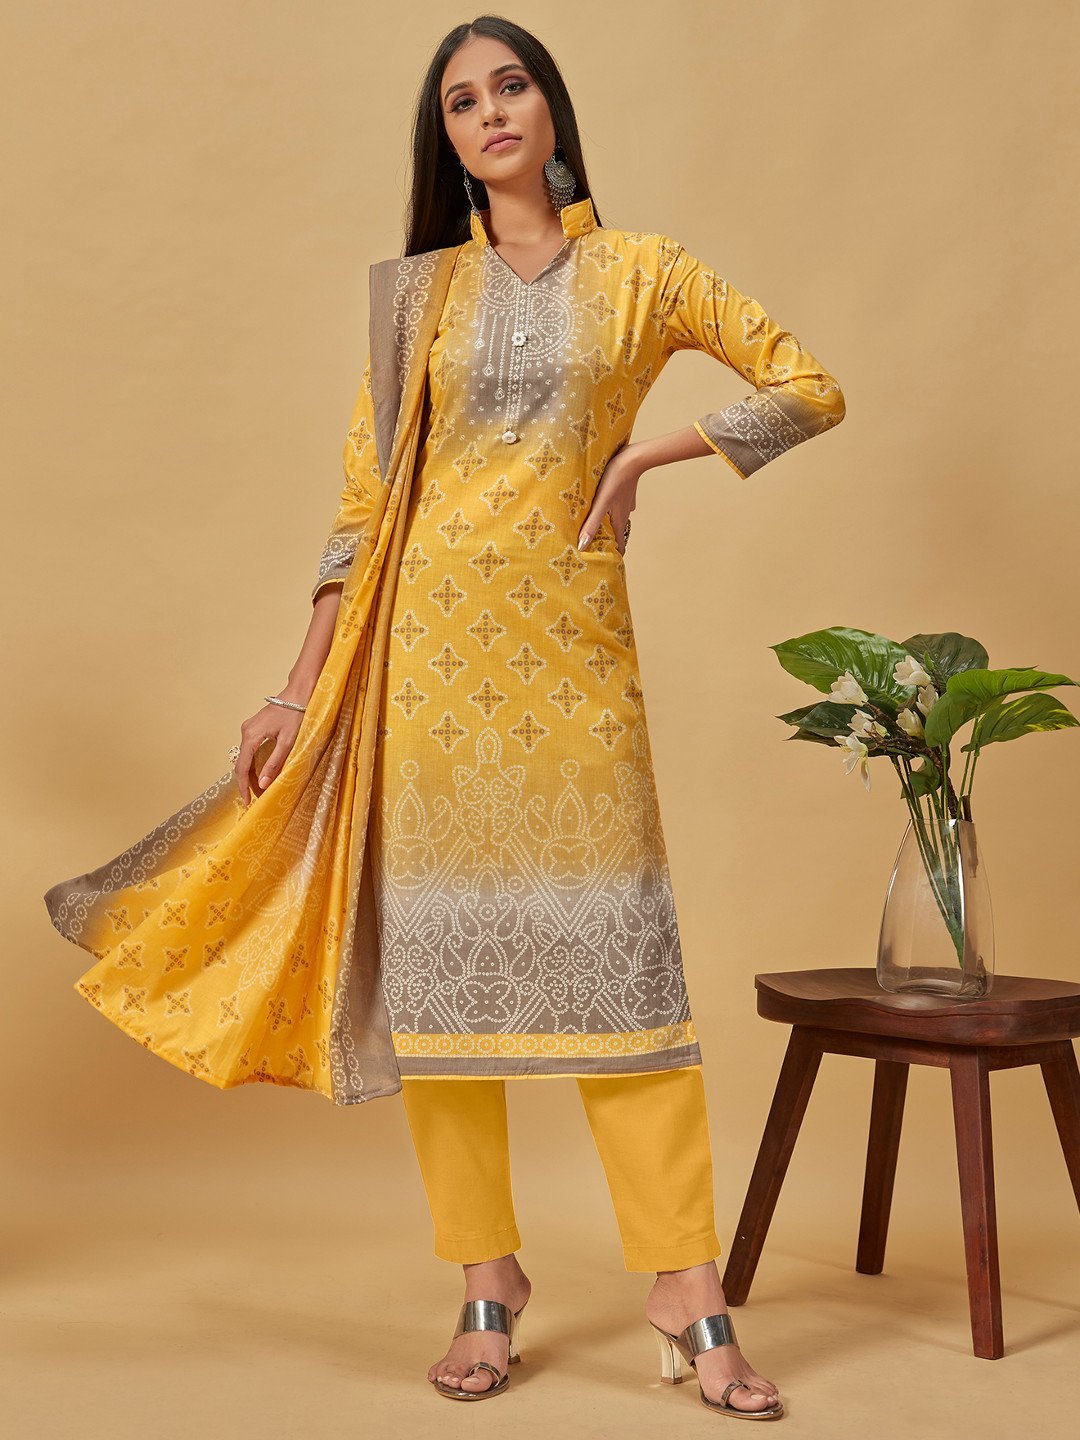 Unstitched Cotton Yellow Suit Dress Material for Ladies - Stilento